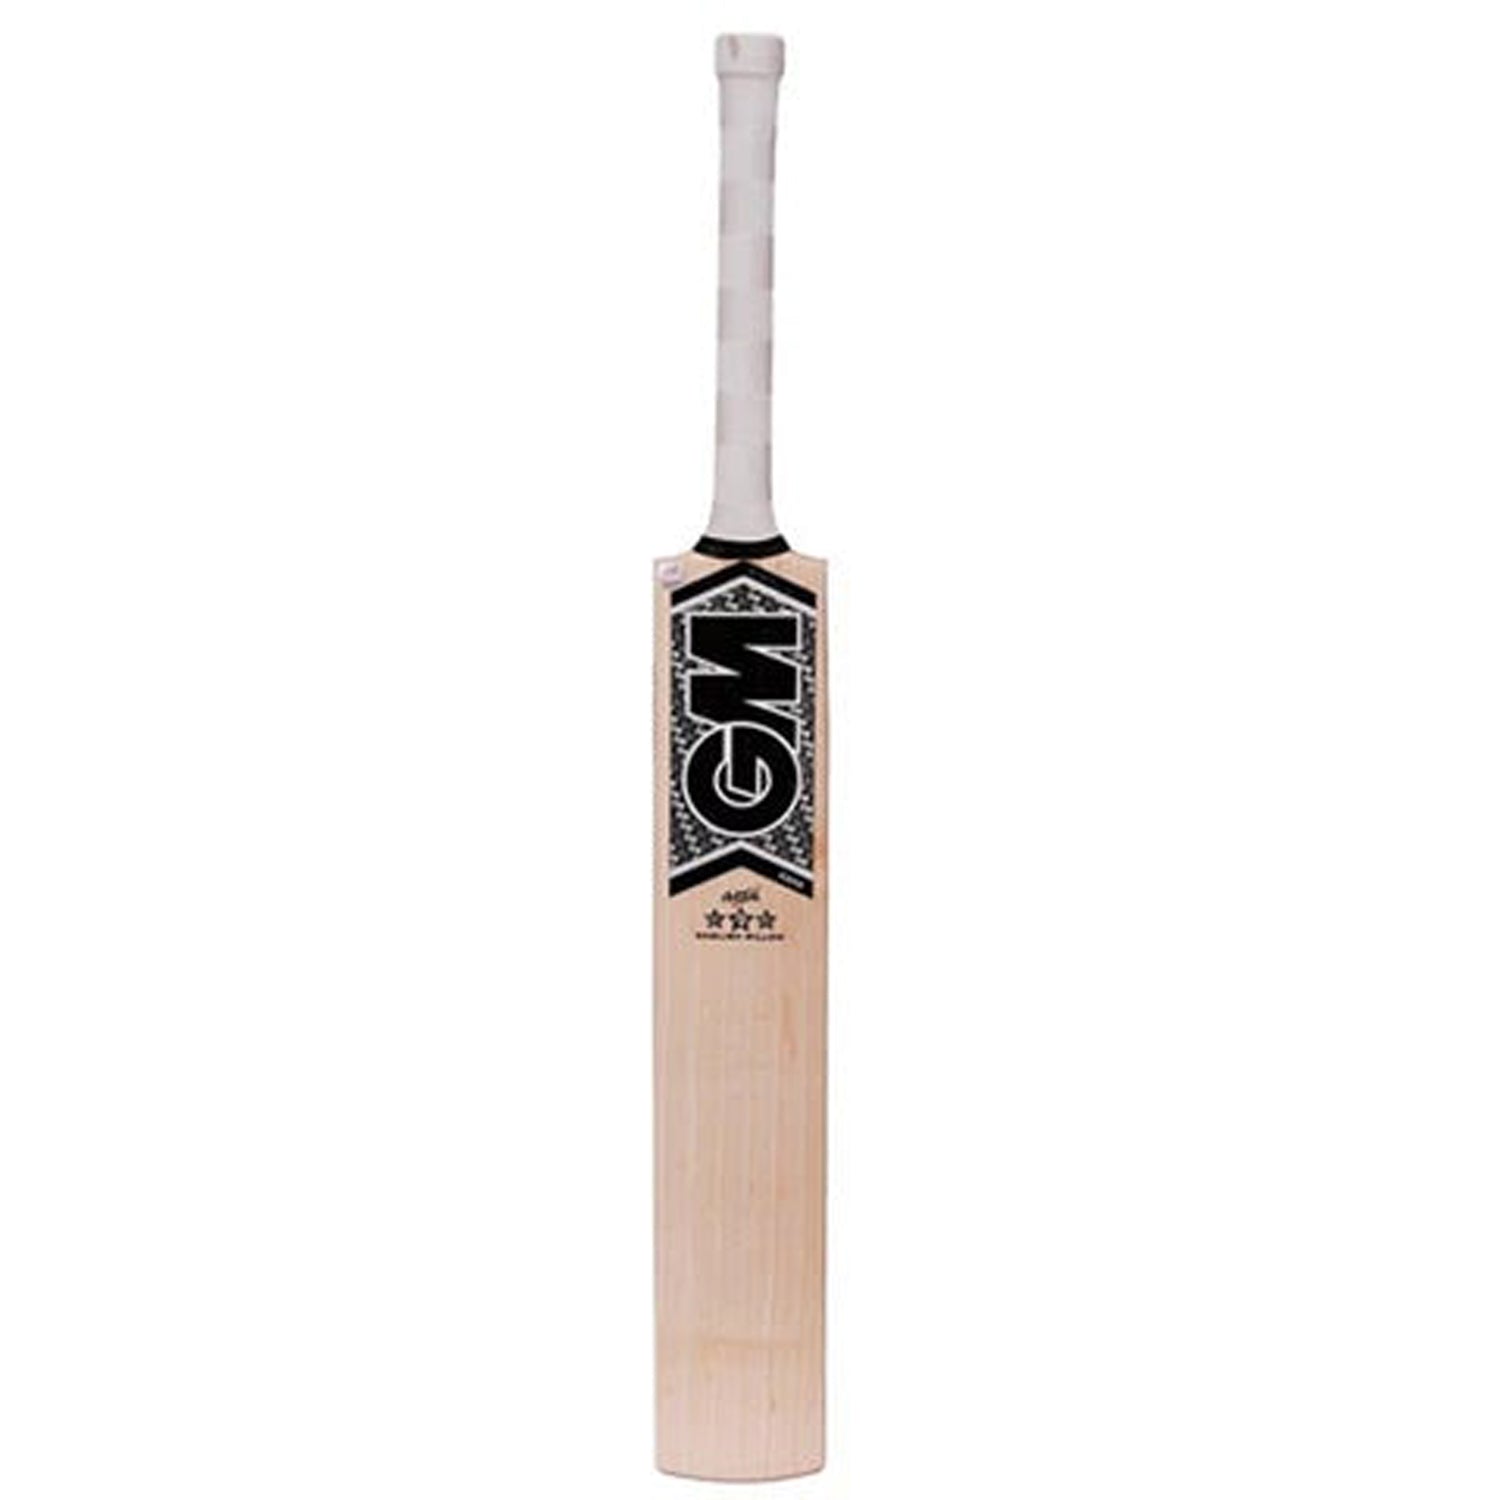 GM Kaha 404 English Willow Cricket Bat - Best Price online Prokicksports.com